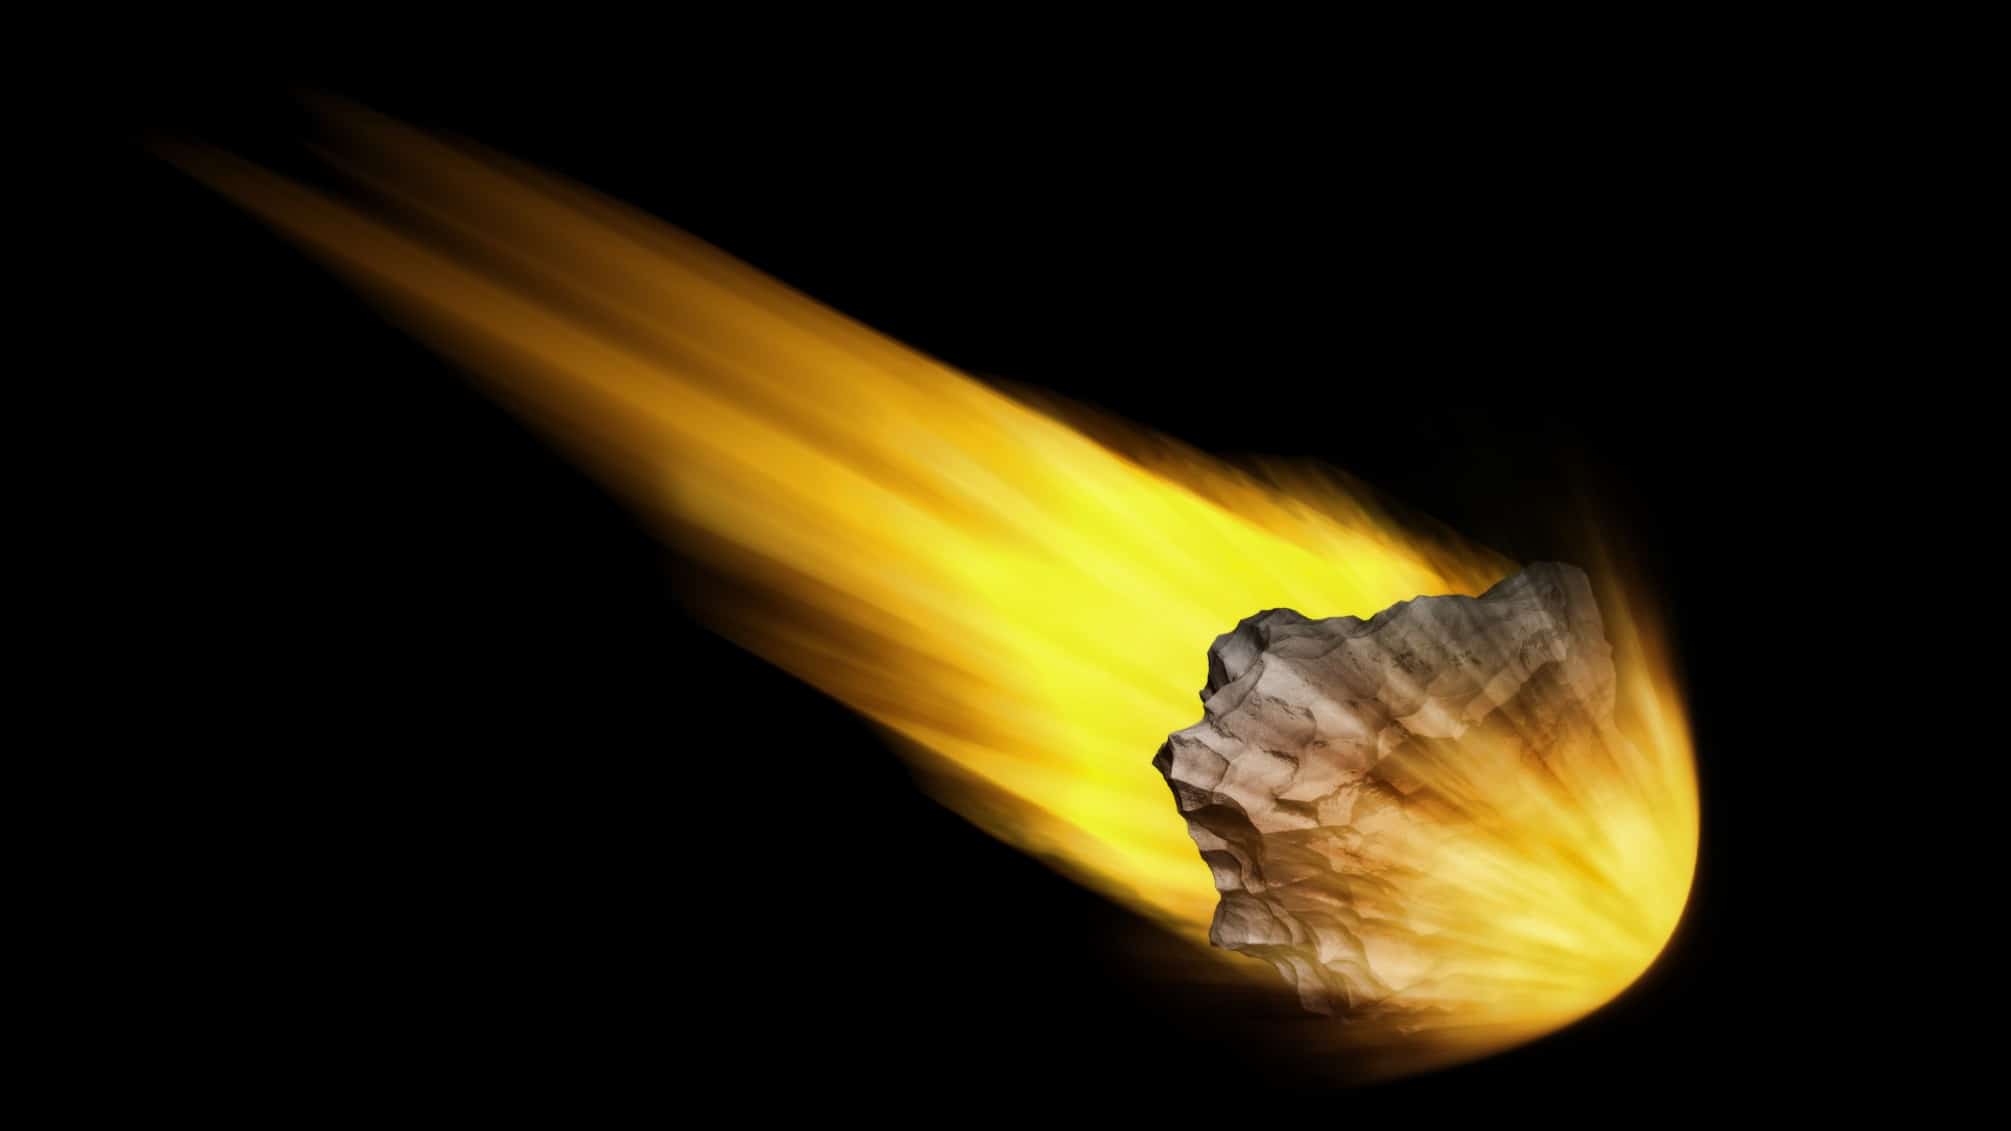 asx iron ore share price crash represented by meteor speeding through space